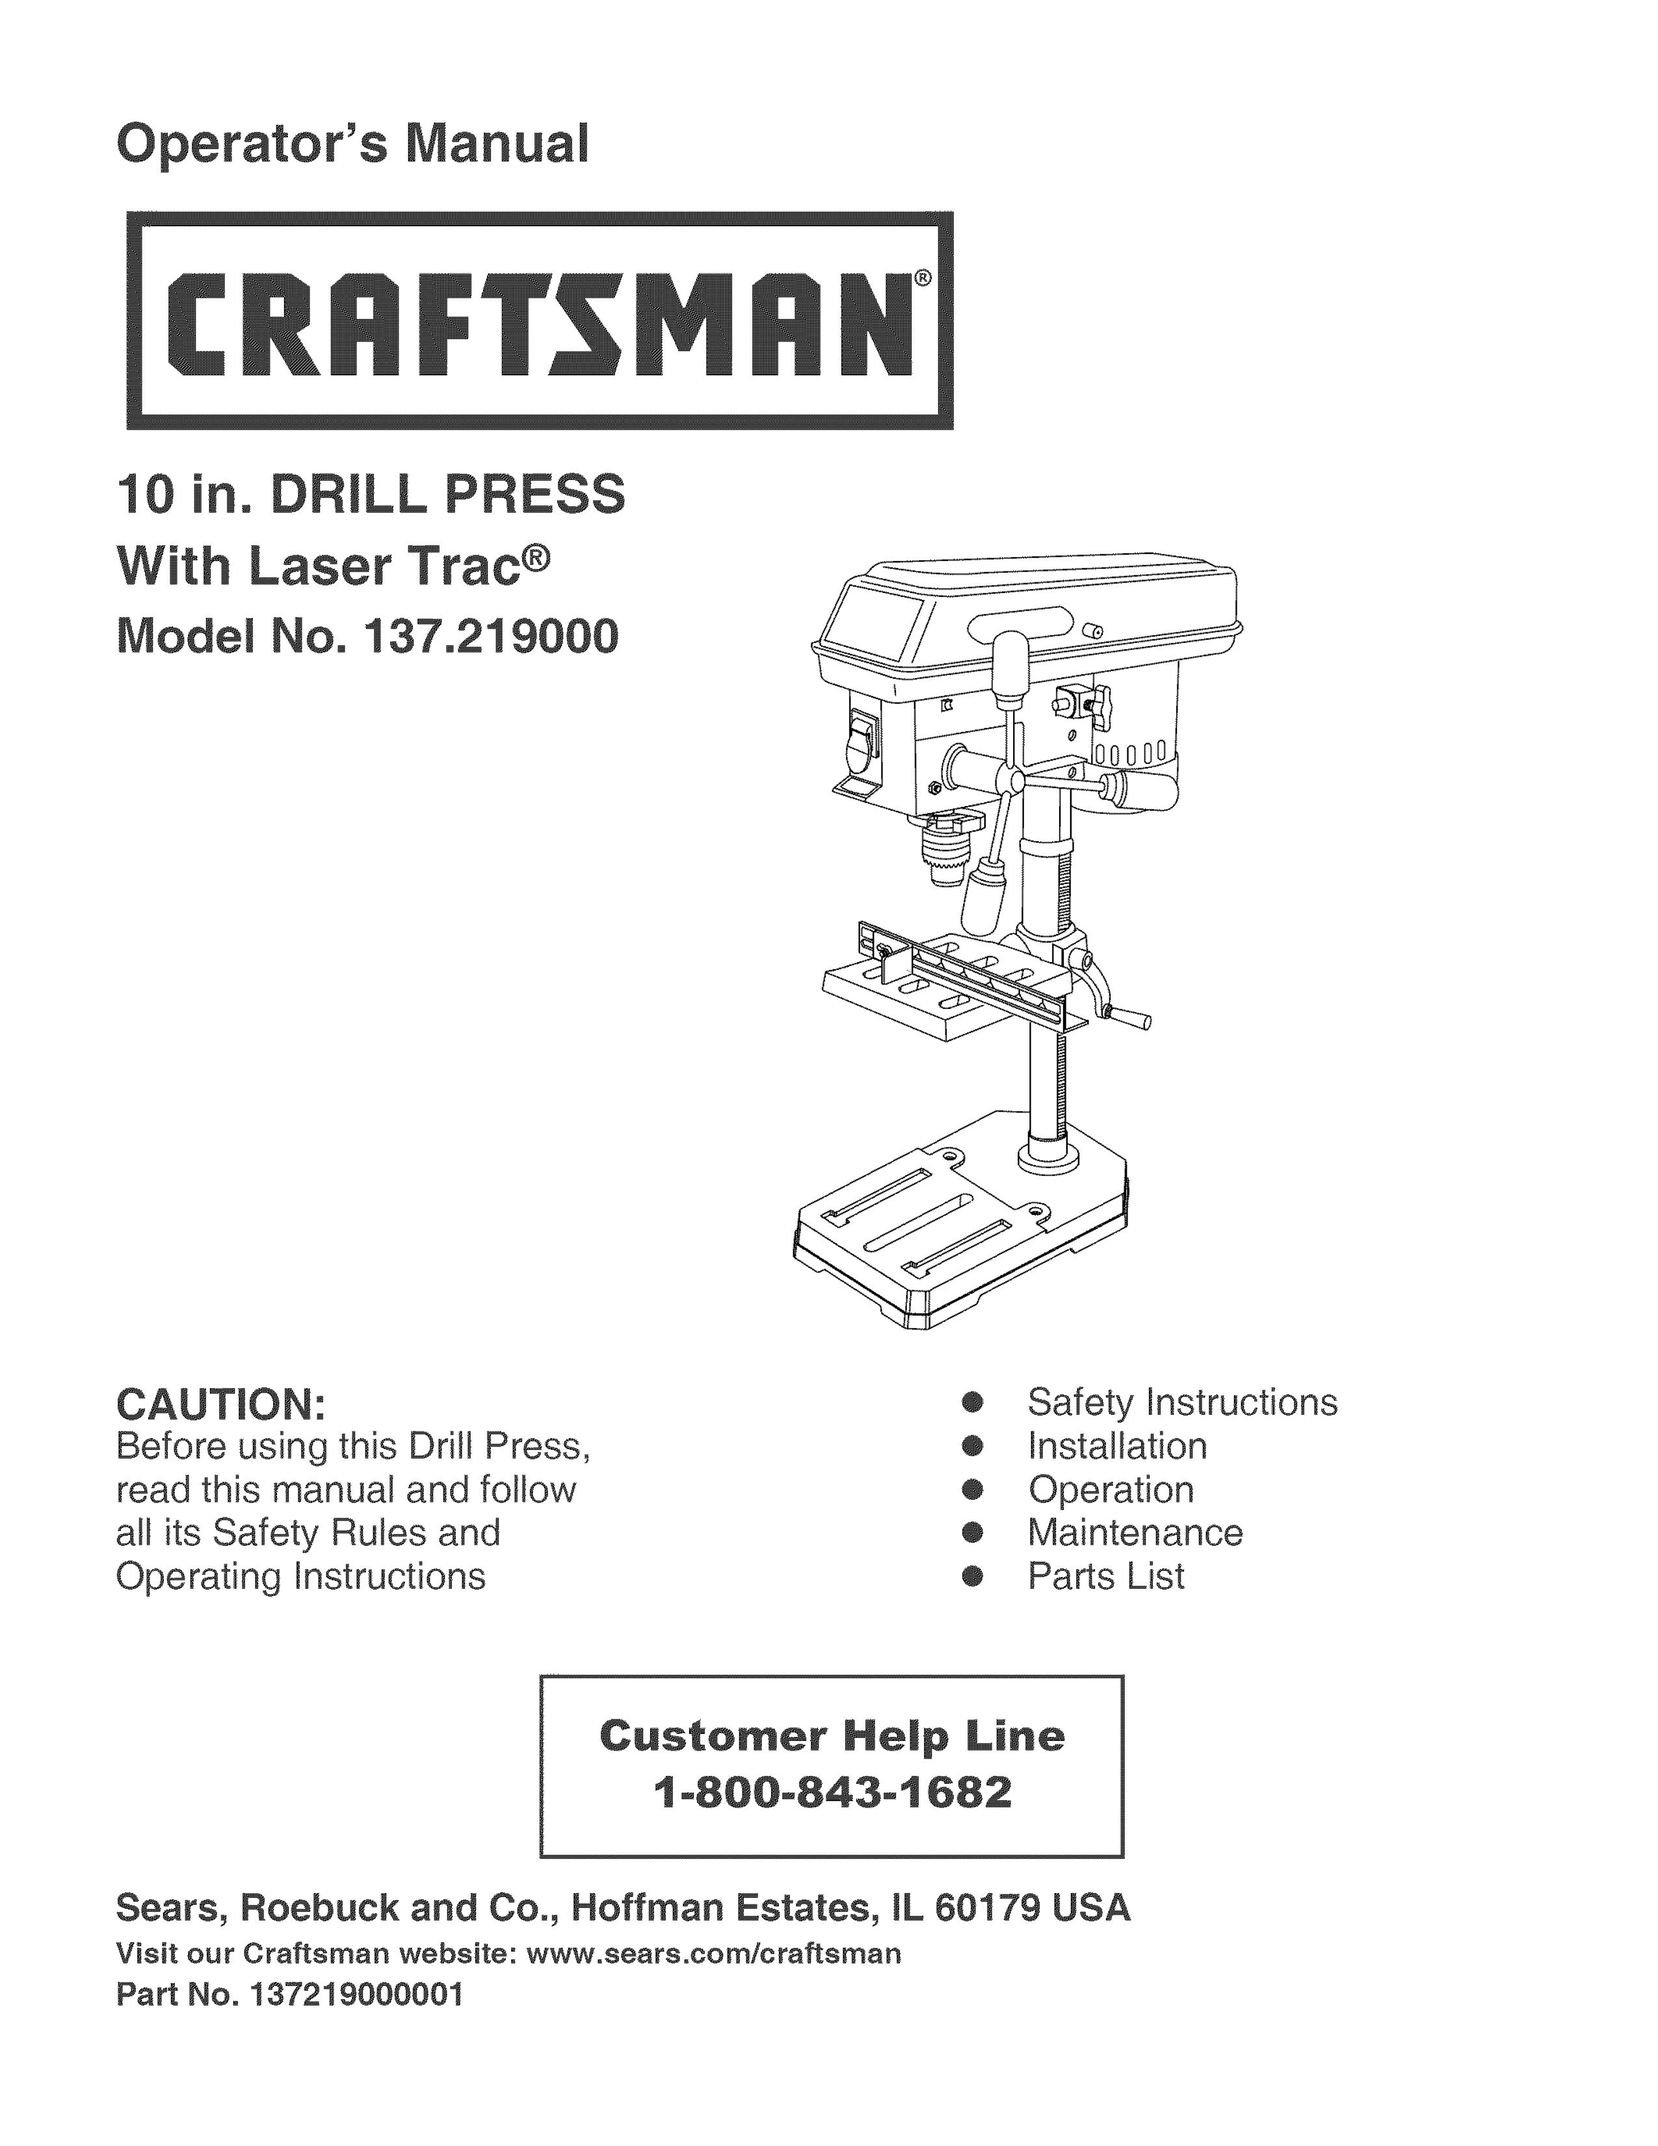 Craftsman 137.219 Cordless Drill User Manual